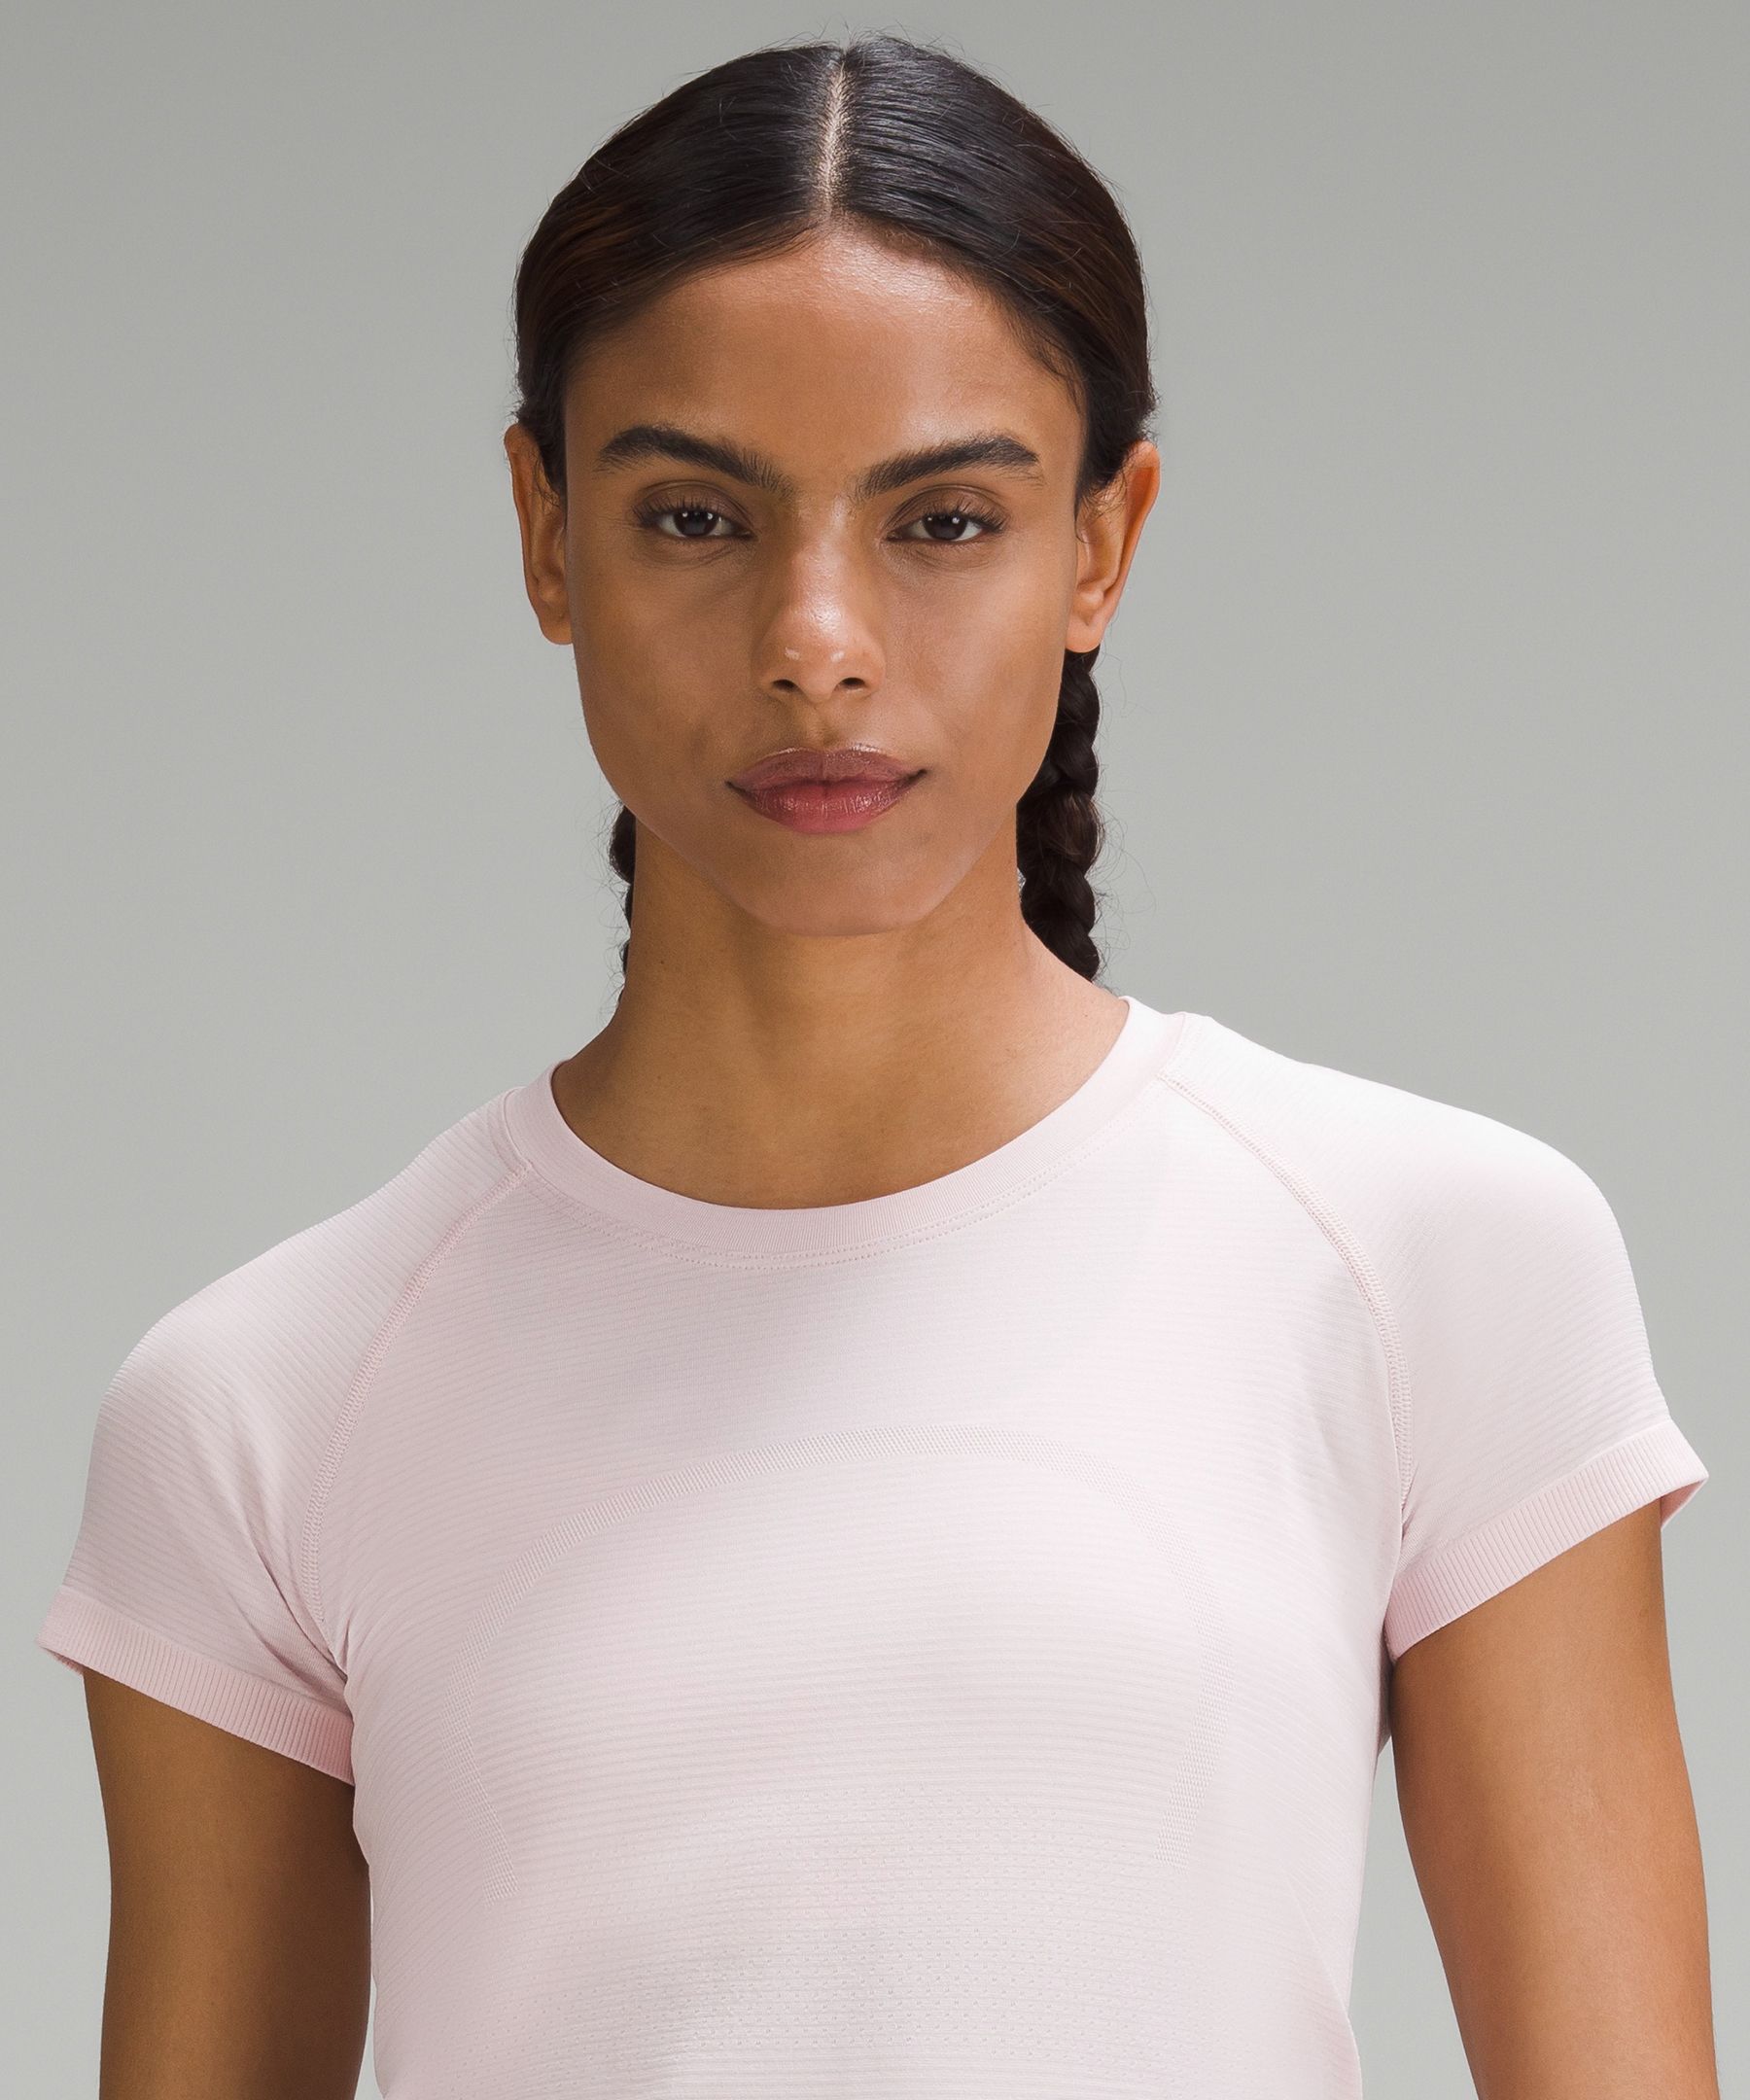 Lululemon Swiftly Tech Short-Sleeve Shirt 2.0 *Race Length Online Only. 4